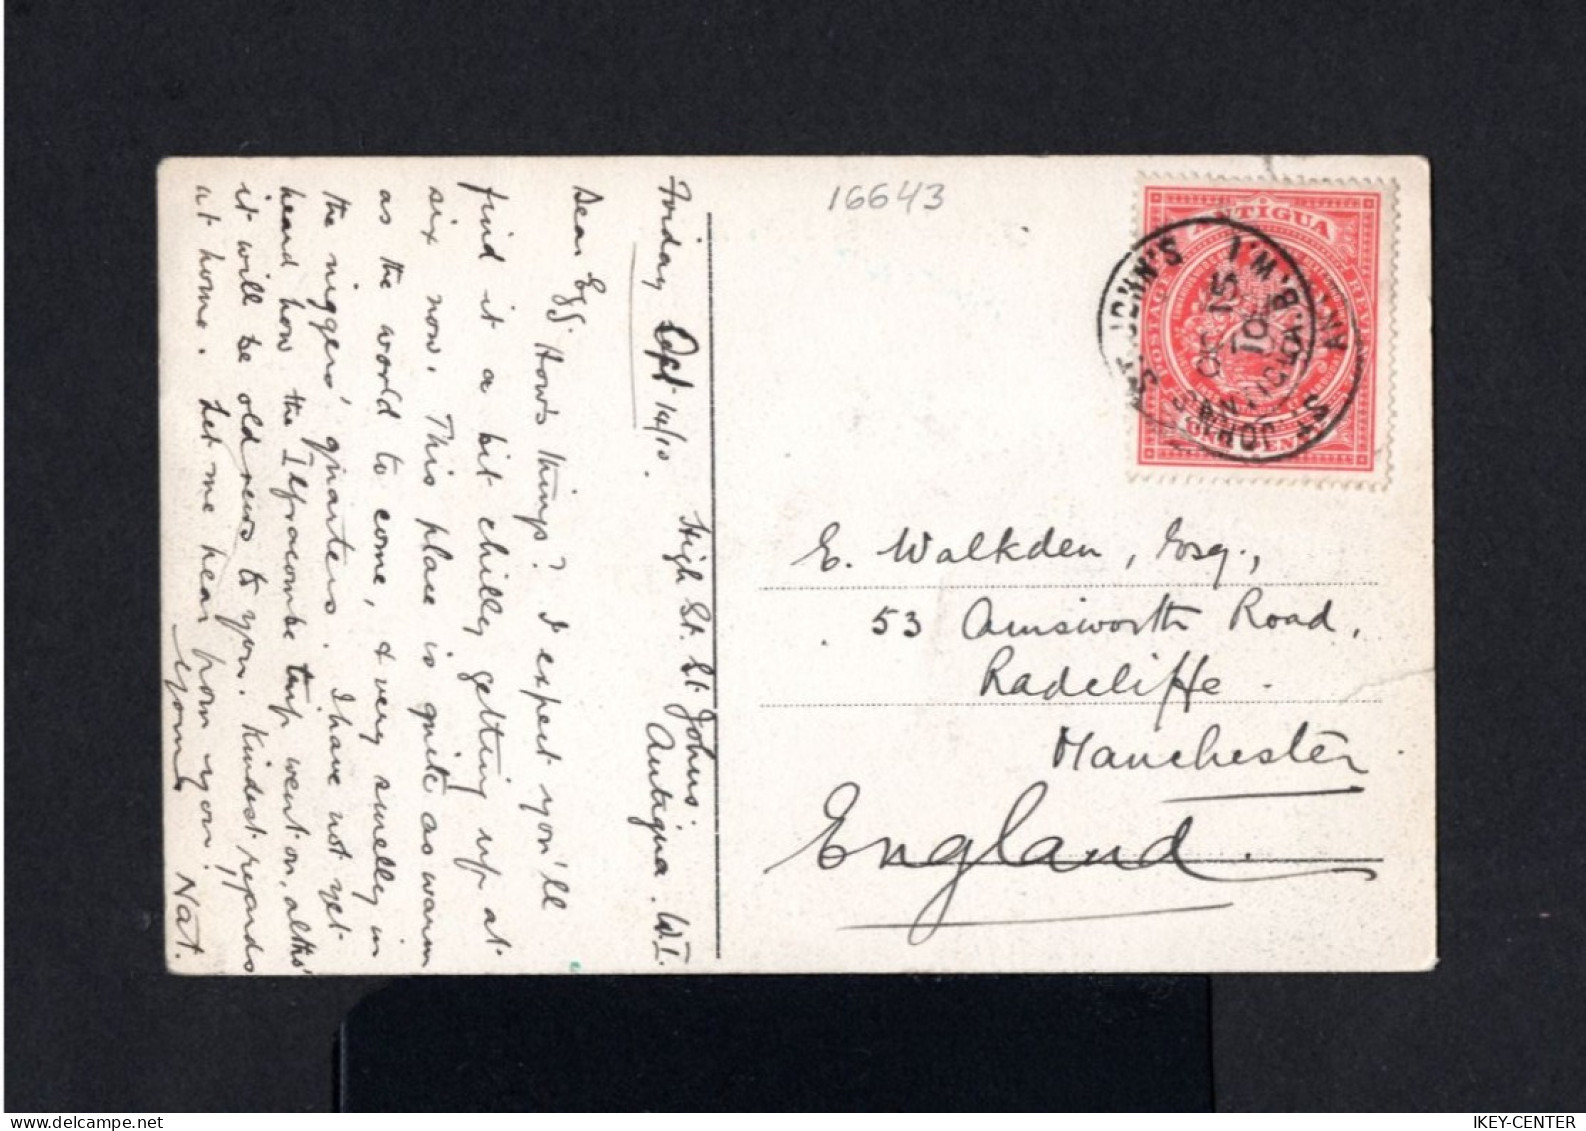 16643-ANTIGUA-.OLD POSTCARD ST.JOHN'S To MANCHESTER (england) 1910.Carte Postale.POSTKARTE.British ANTIGUA. - 1858-1960 Kronenkolonie